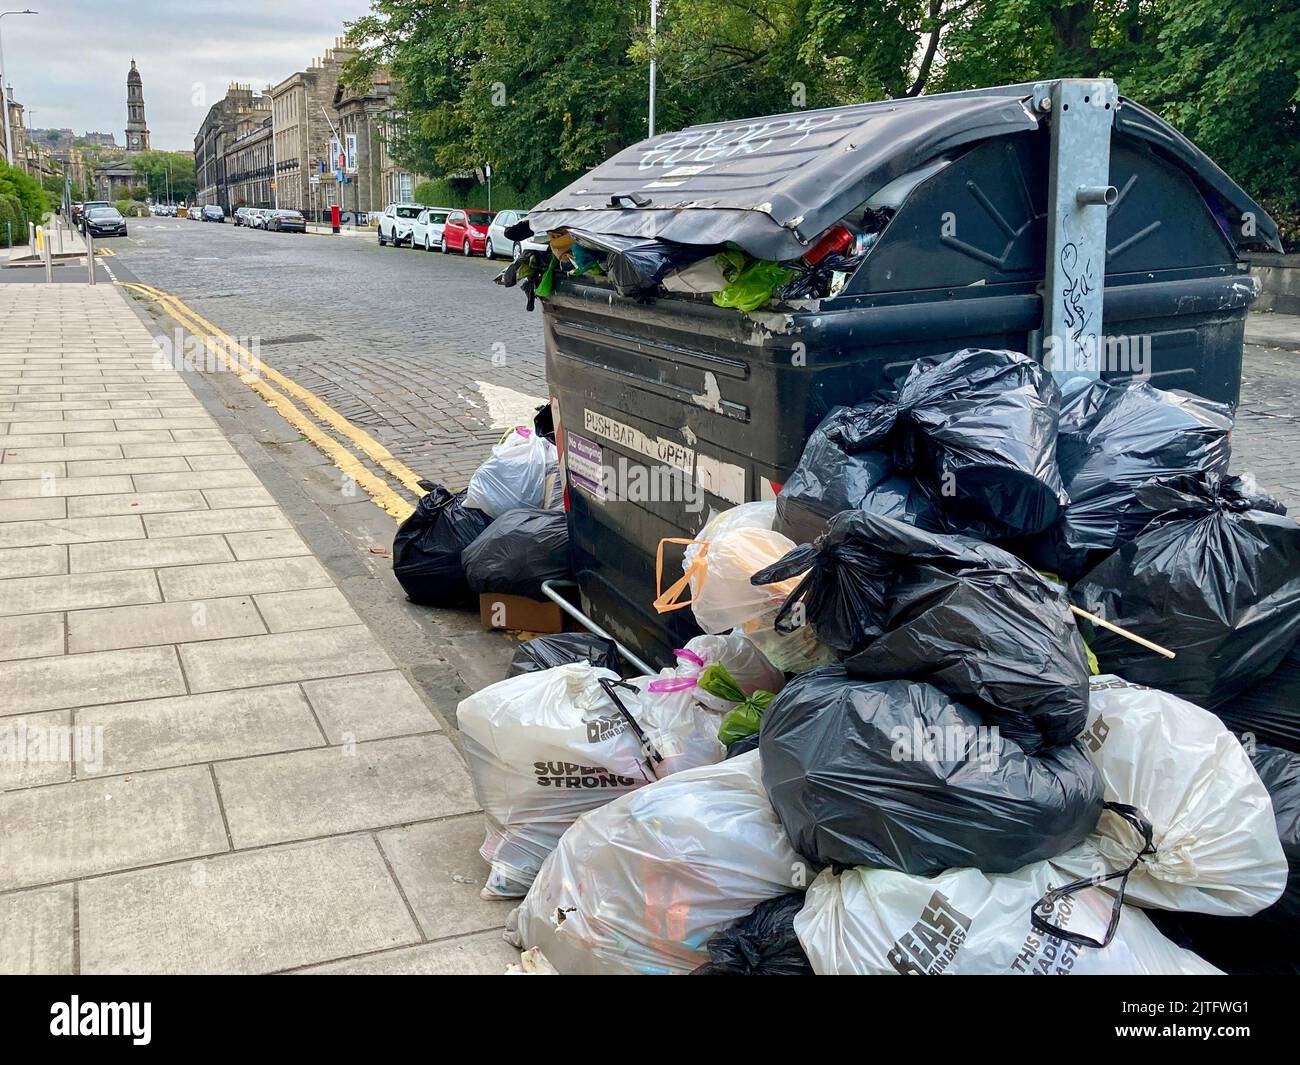 Edinburgh Bin Strikes, waste bins overflowing into the streets with rubbish. Scotland Uk. 2022 Stock Photo